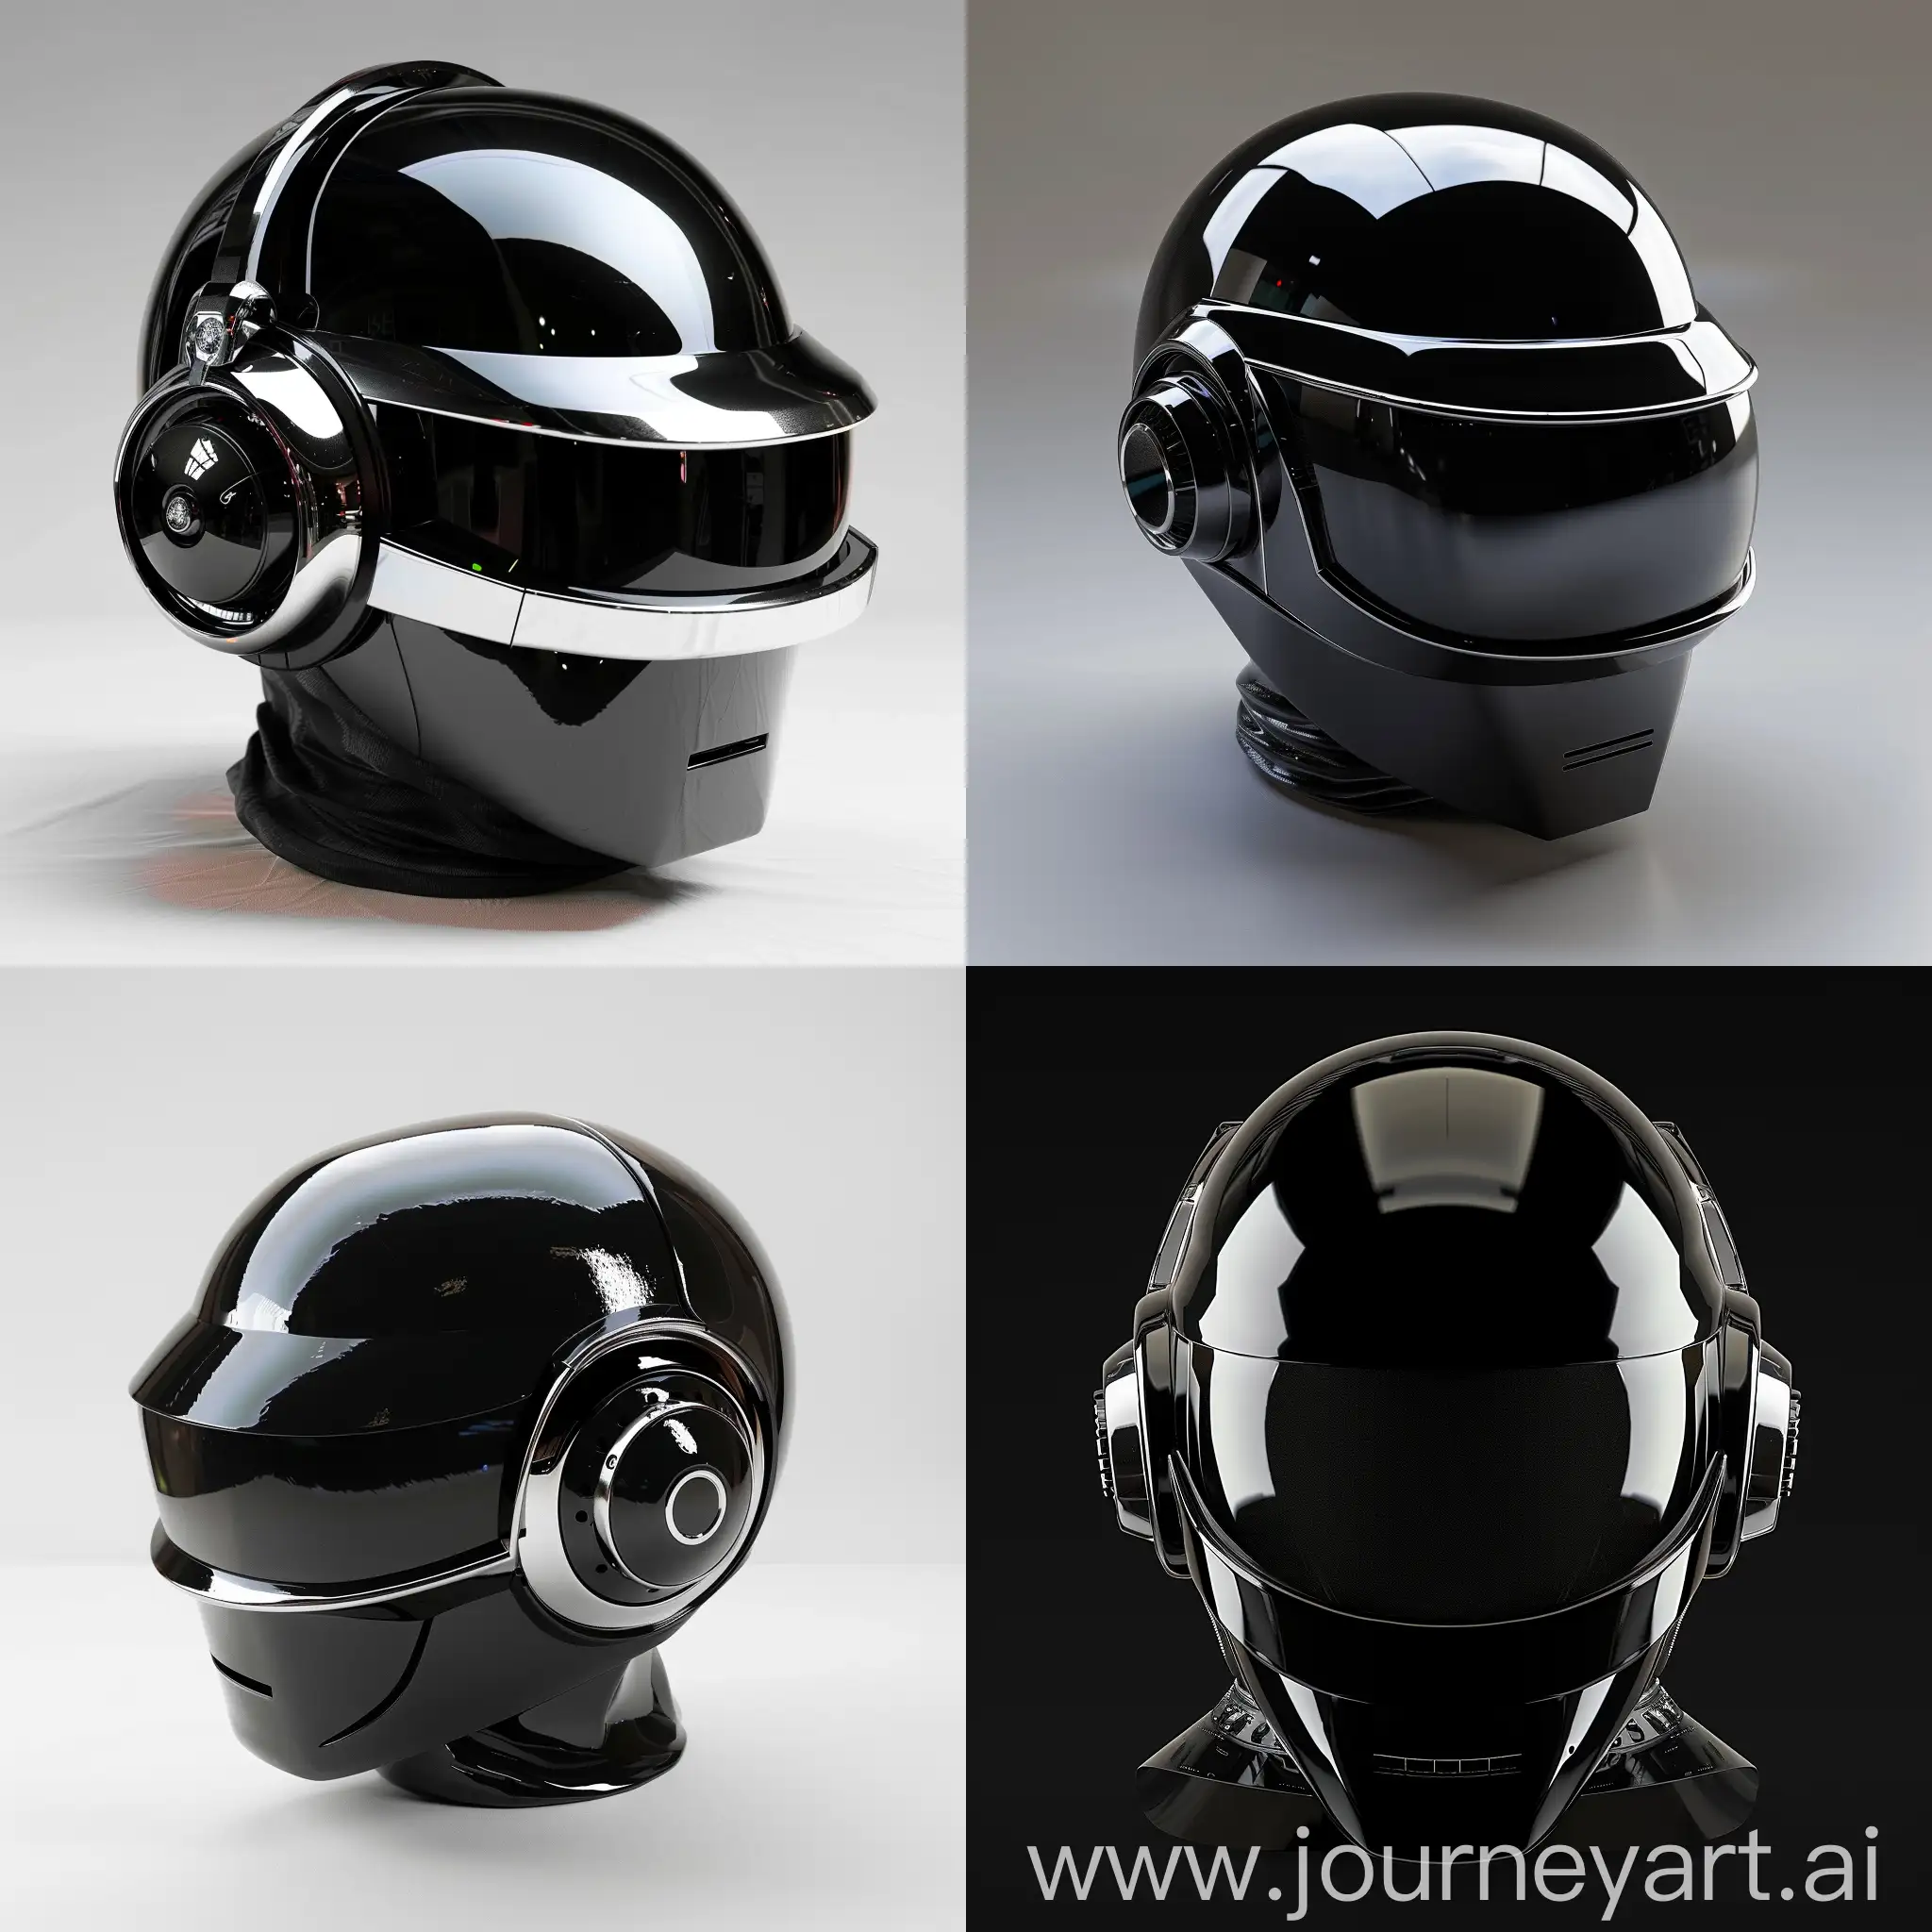 Sleek-Photorealistic-DJ-Helmet-Inspired-by-Daft-Punk-Style